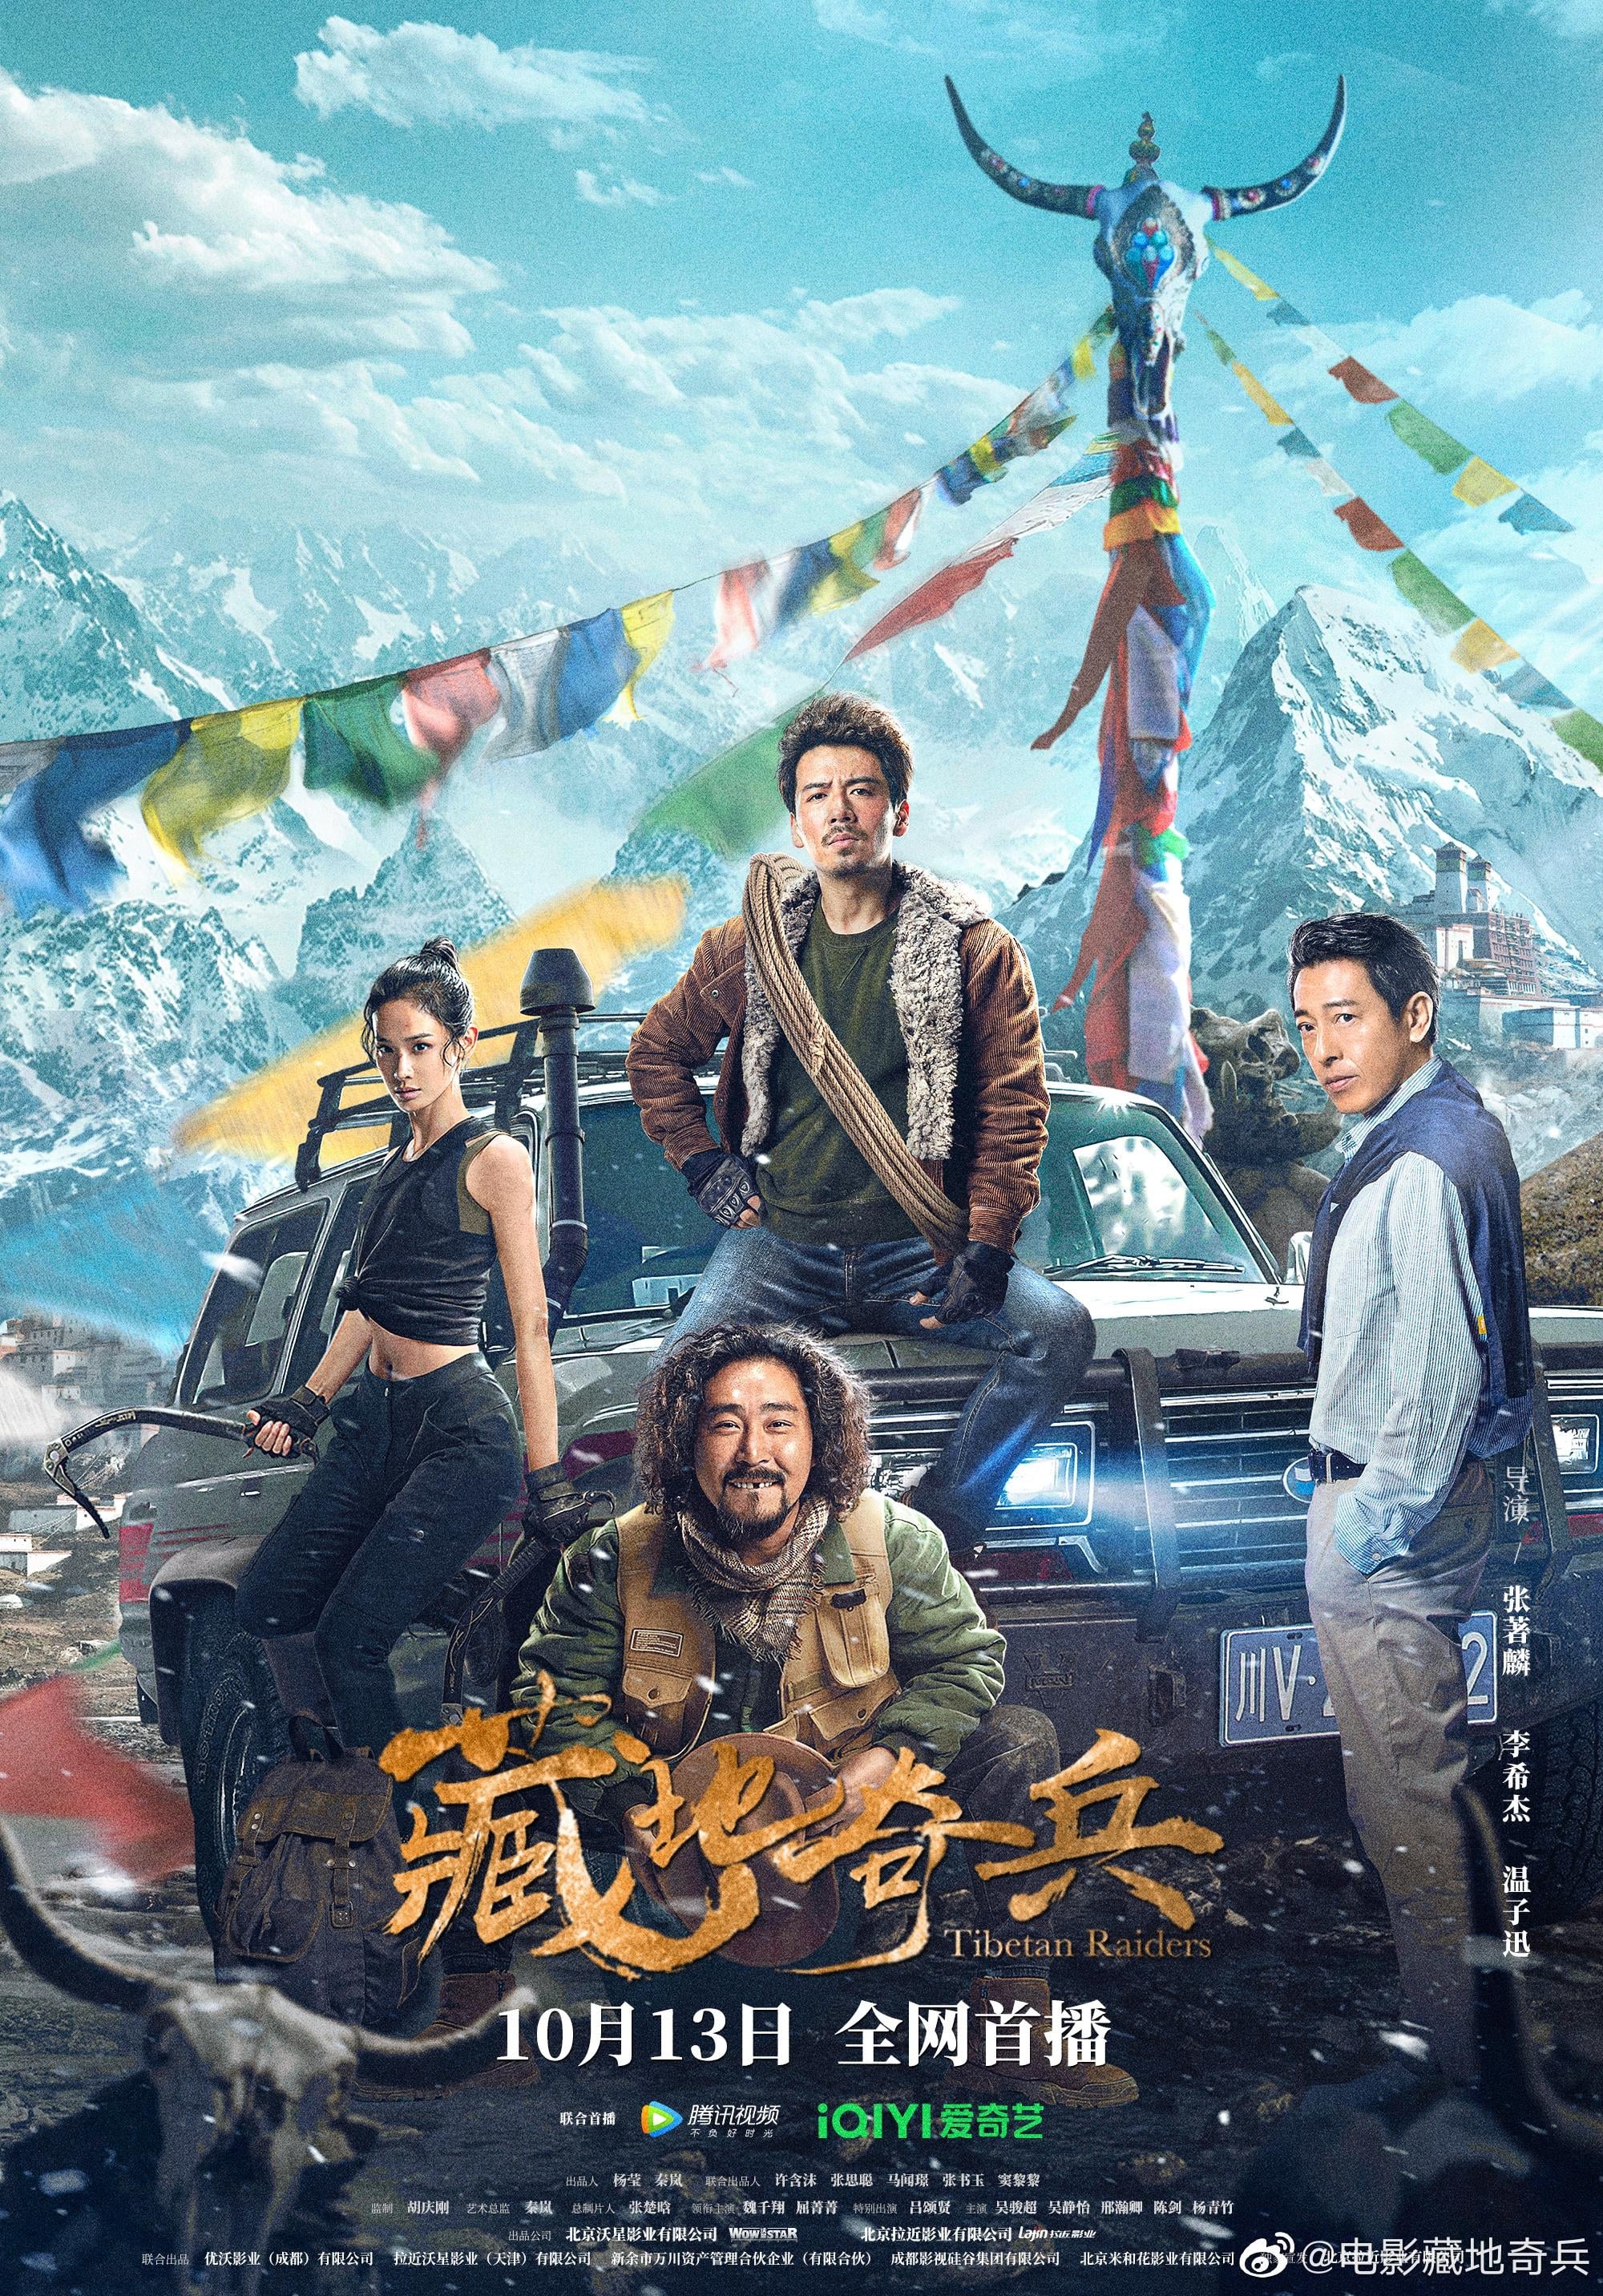 Tibetan Raiders (2022) poster - Allmovieland.com